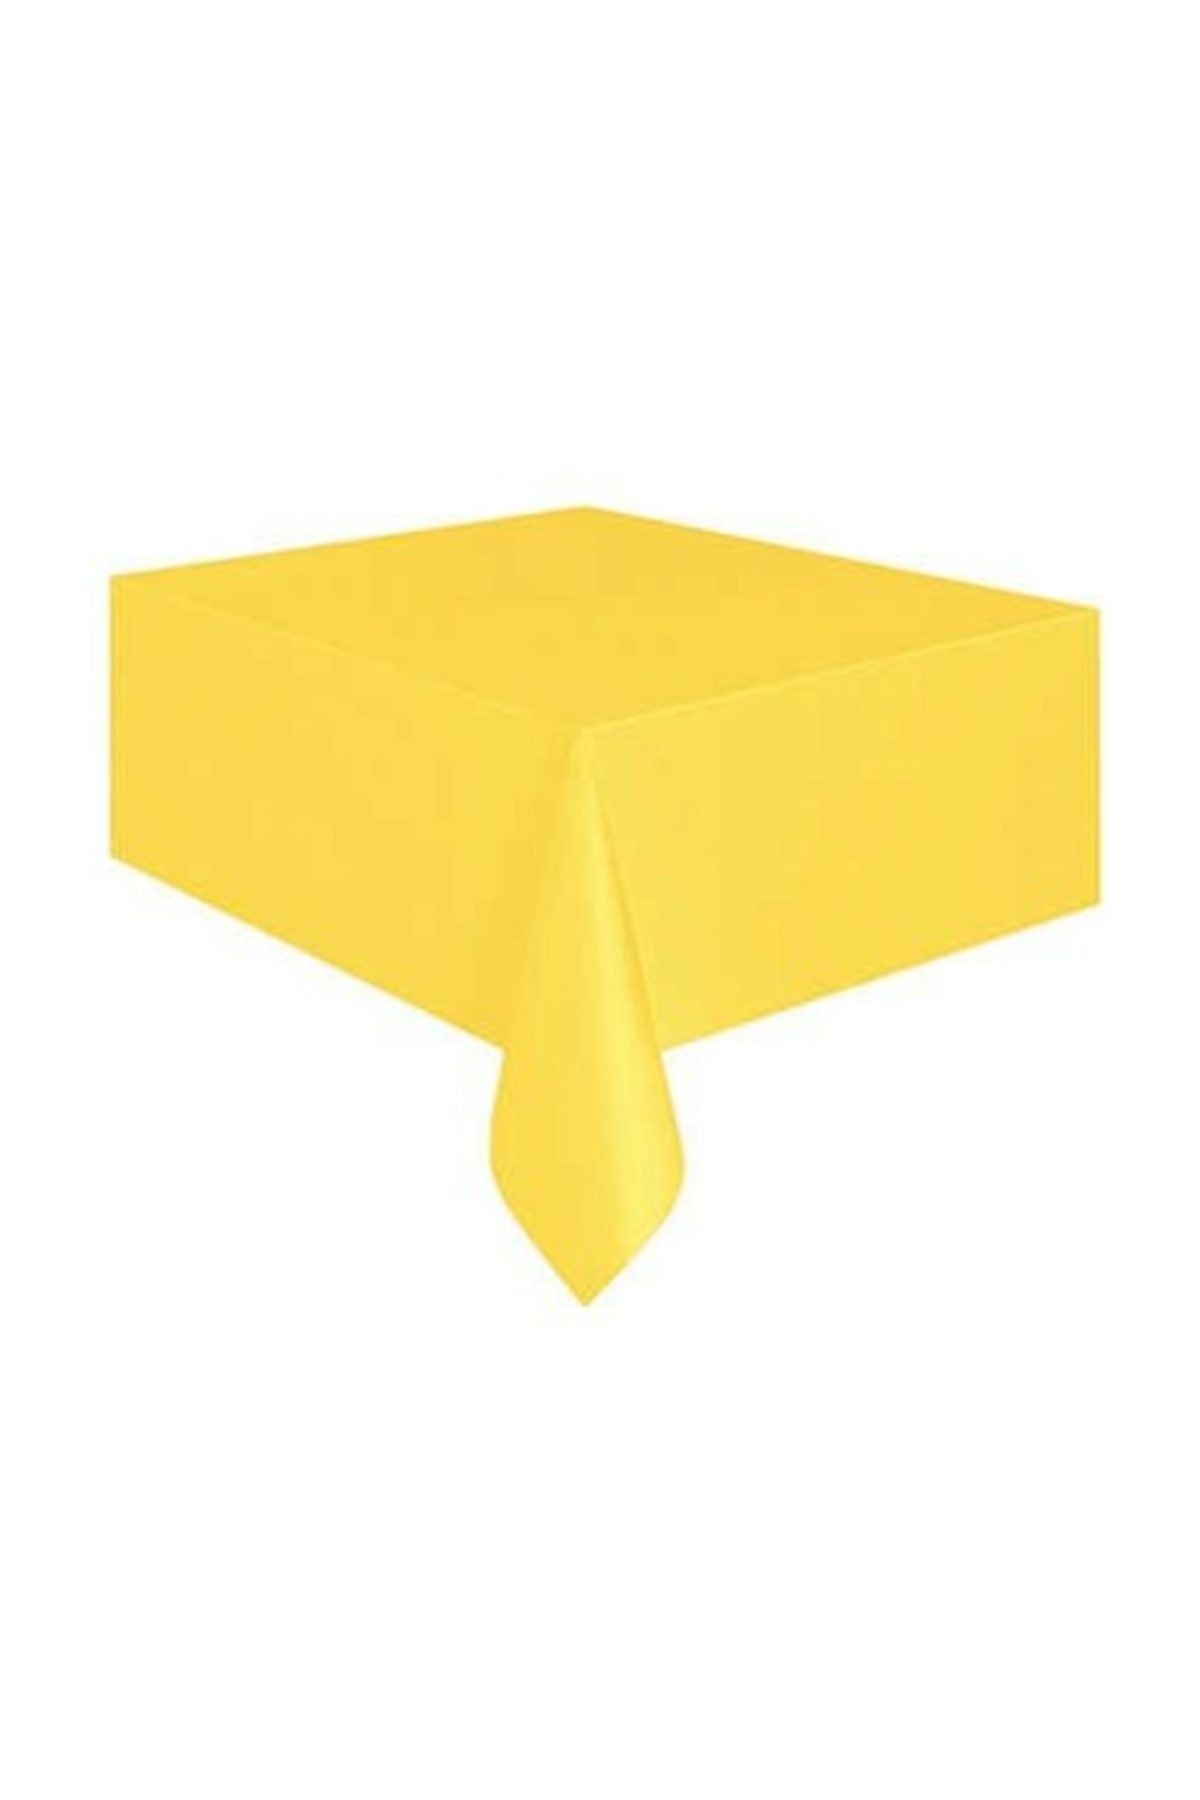 Genel Markalar Plastik Sarı Masa Örtüsü 120*180 Cm